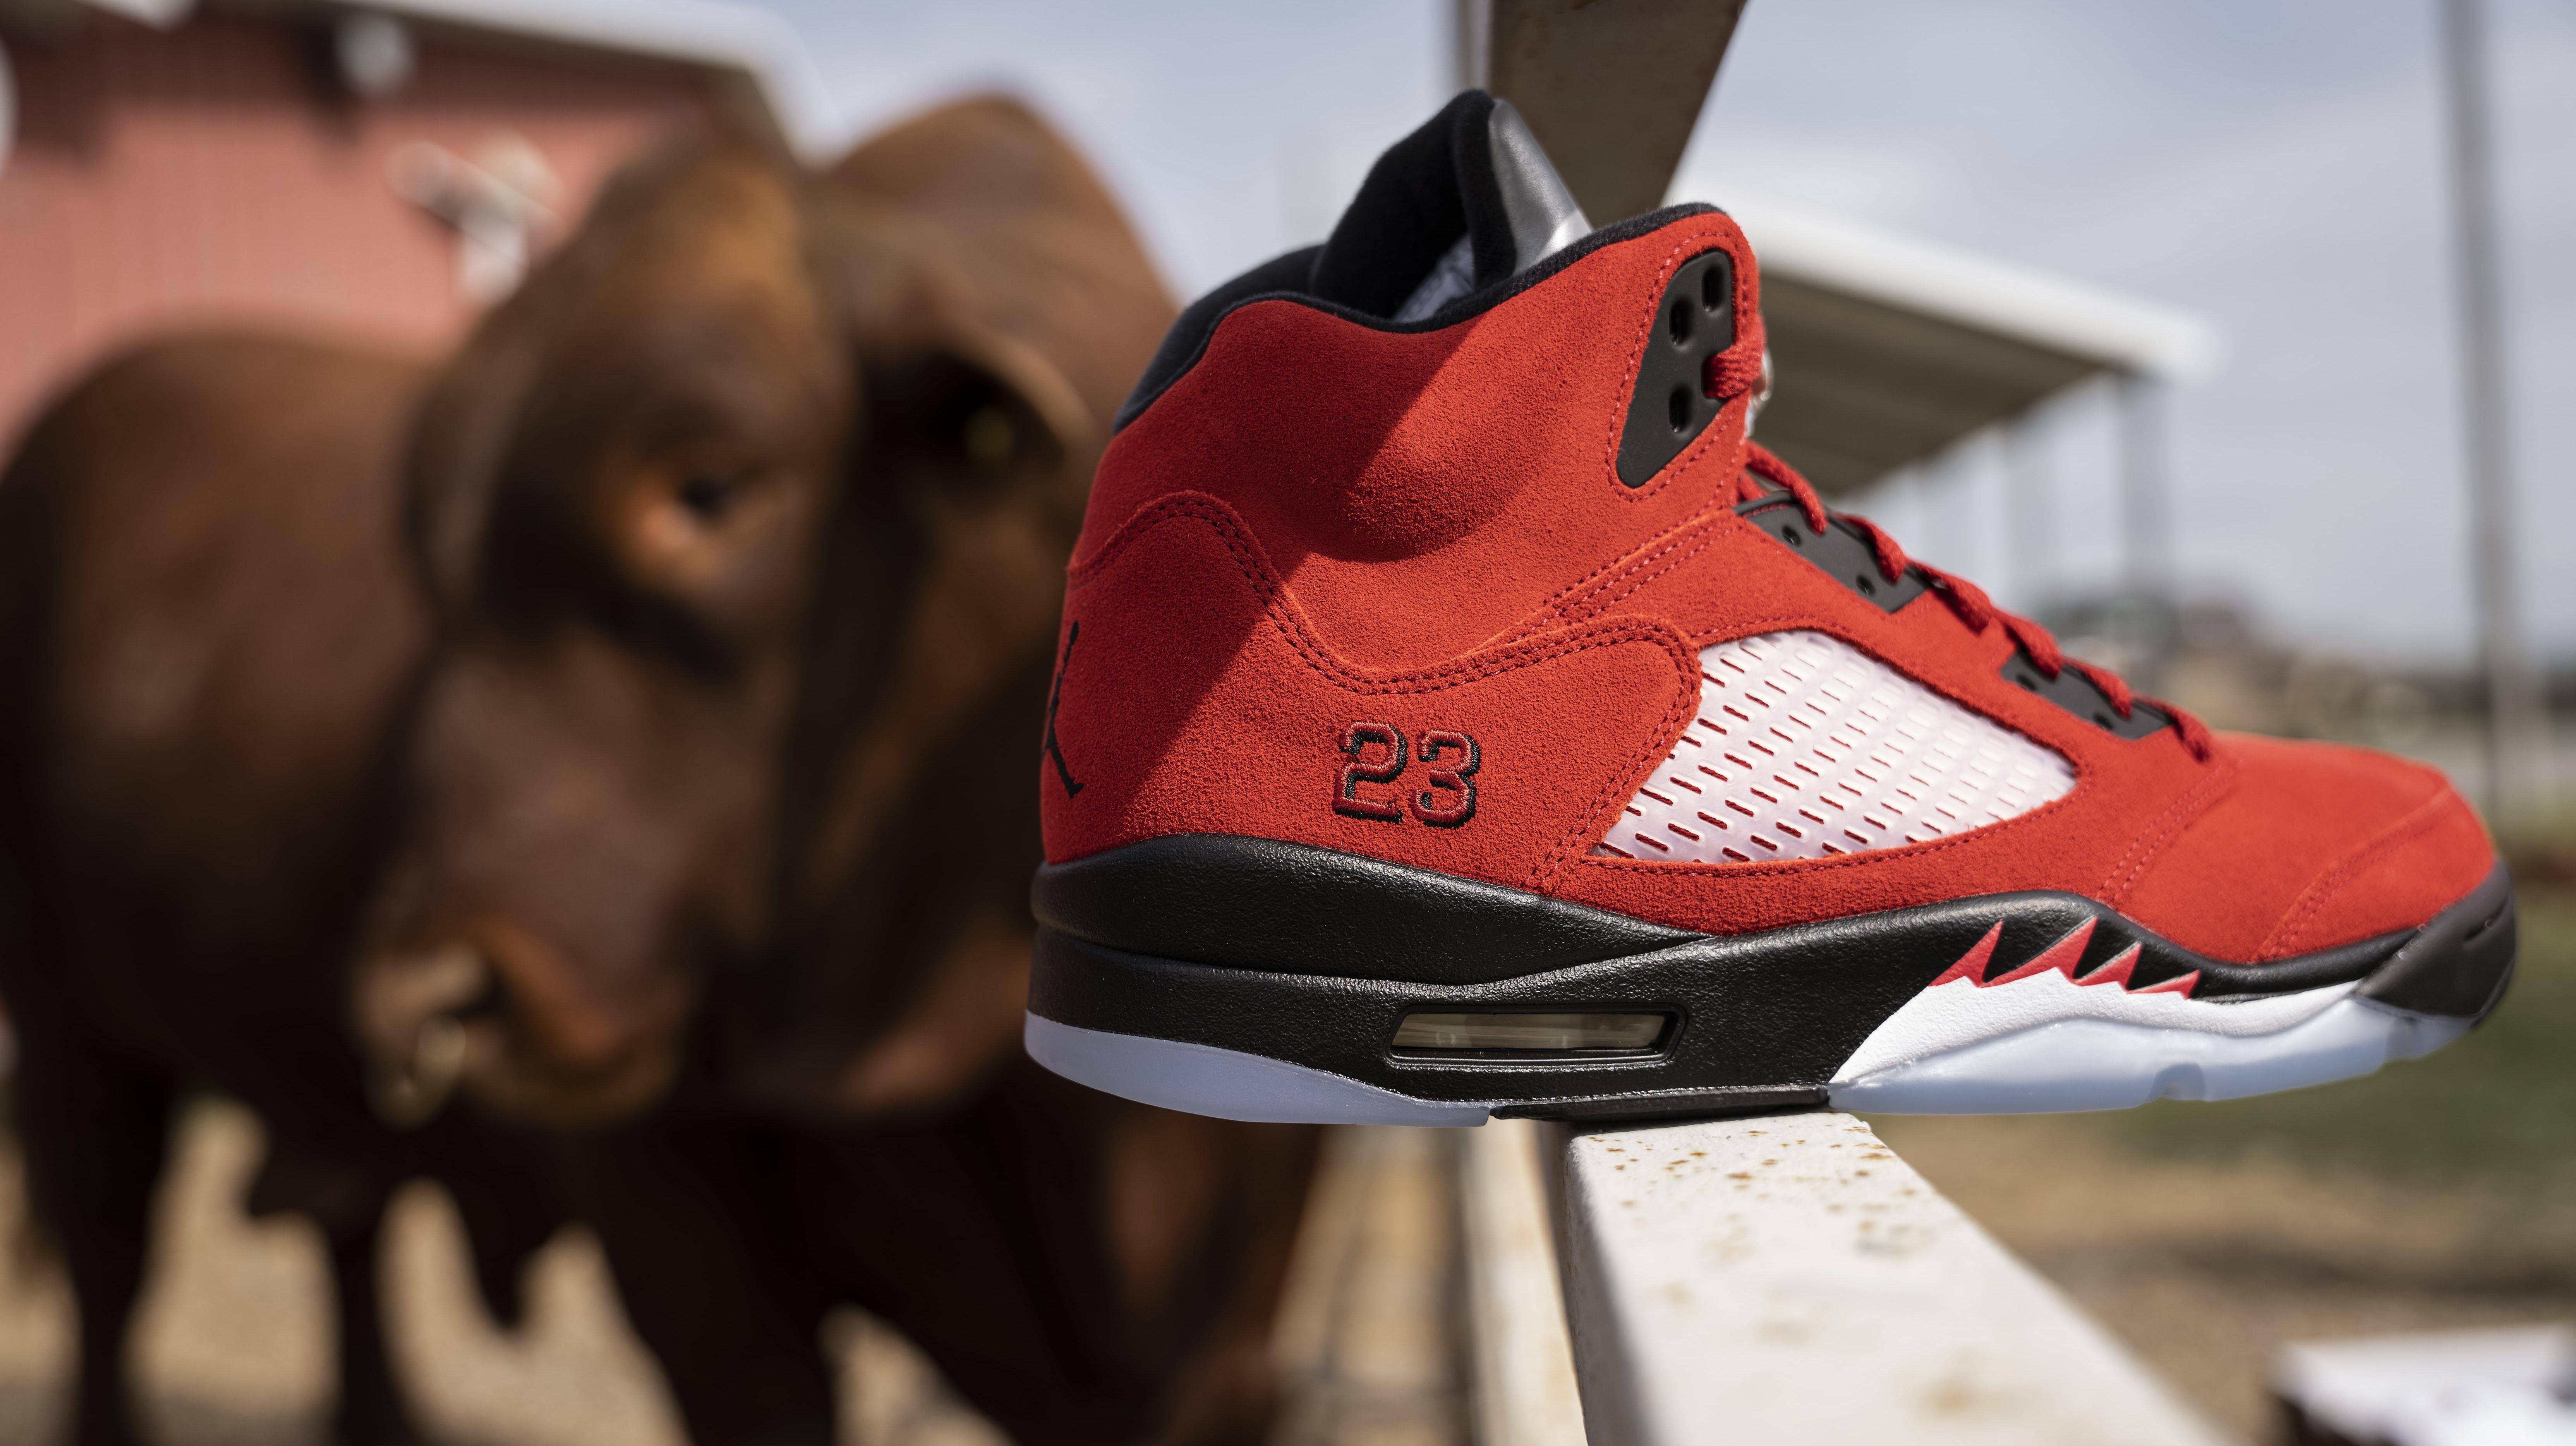 New Air Jordan 5 Toro Bravo Raging Bull WORTH IT For Sneaker Collection? 